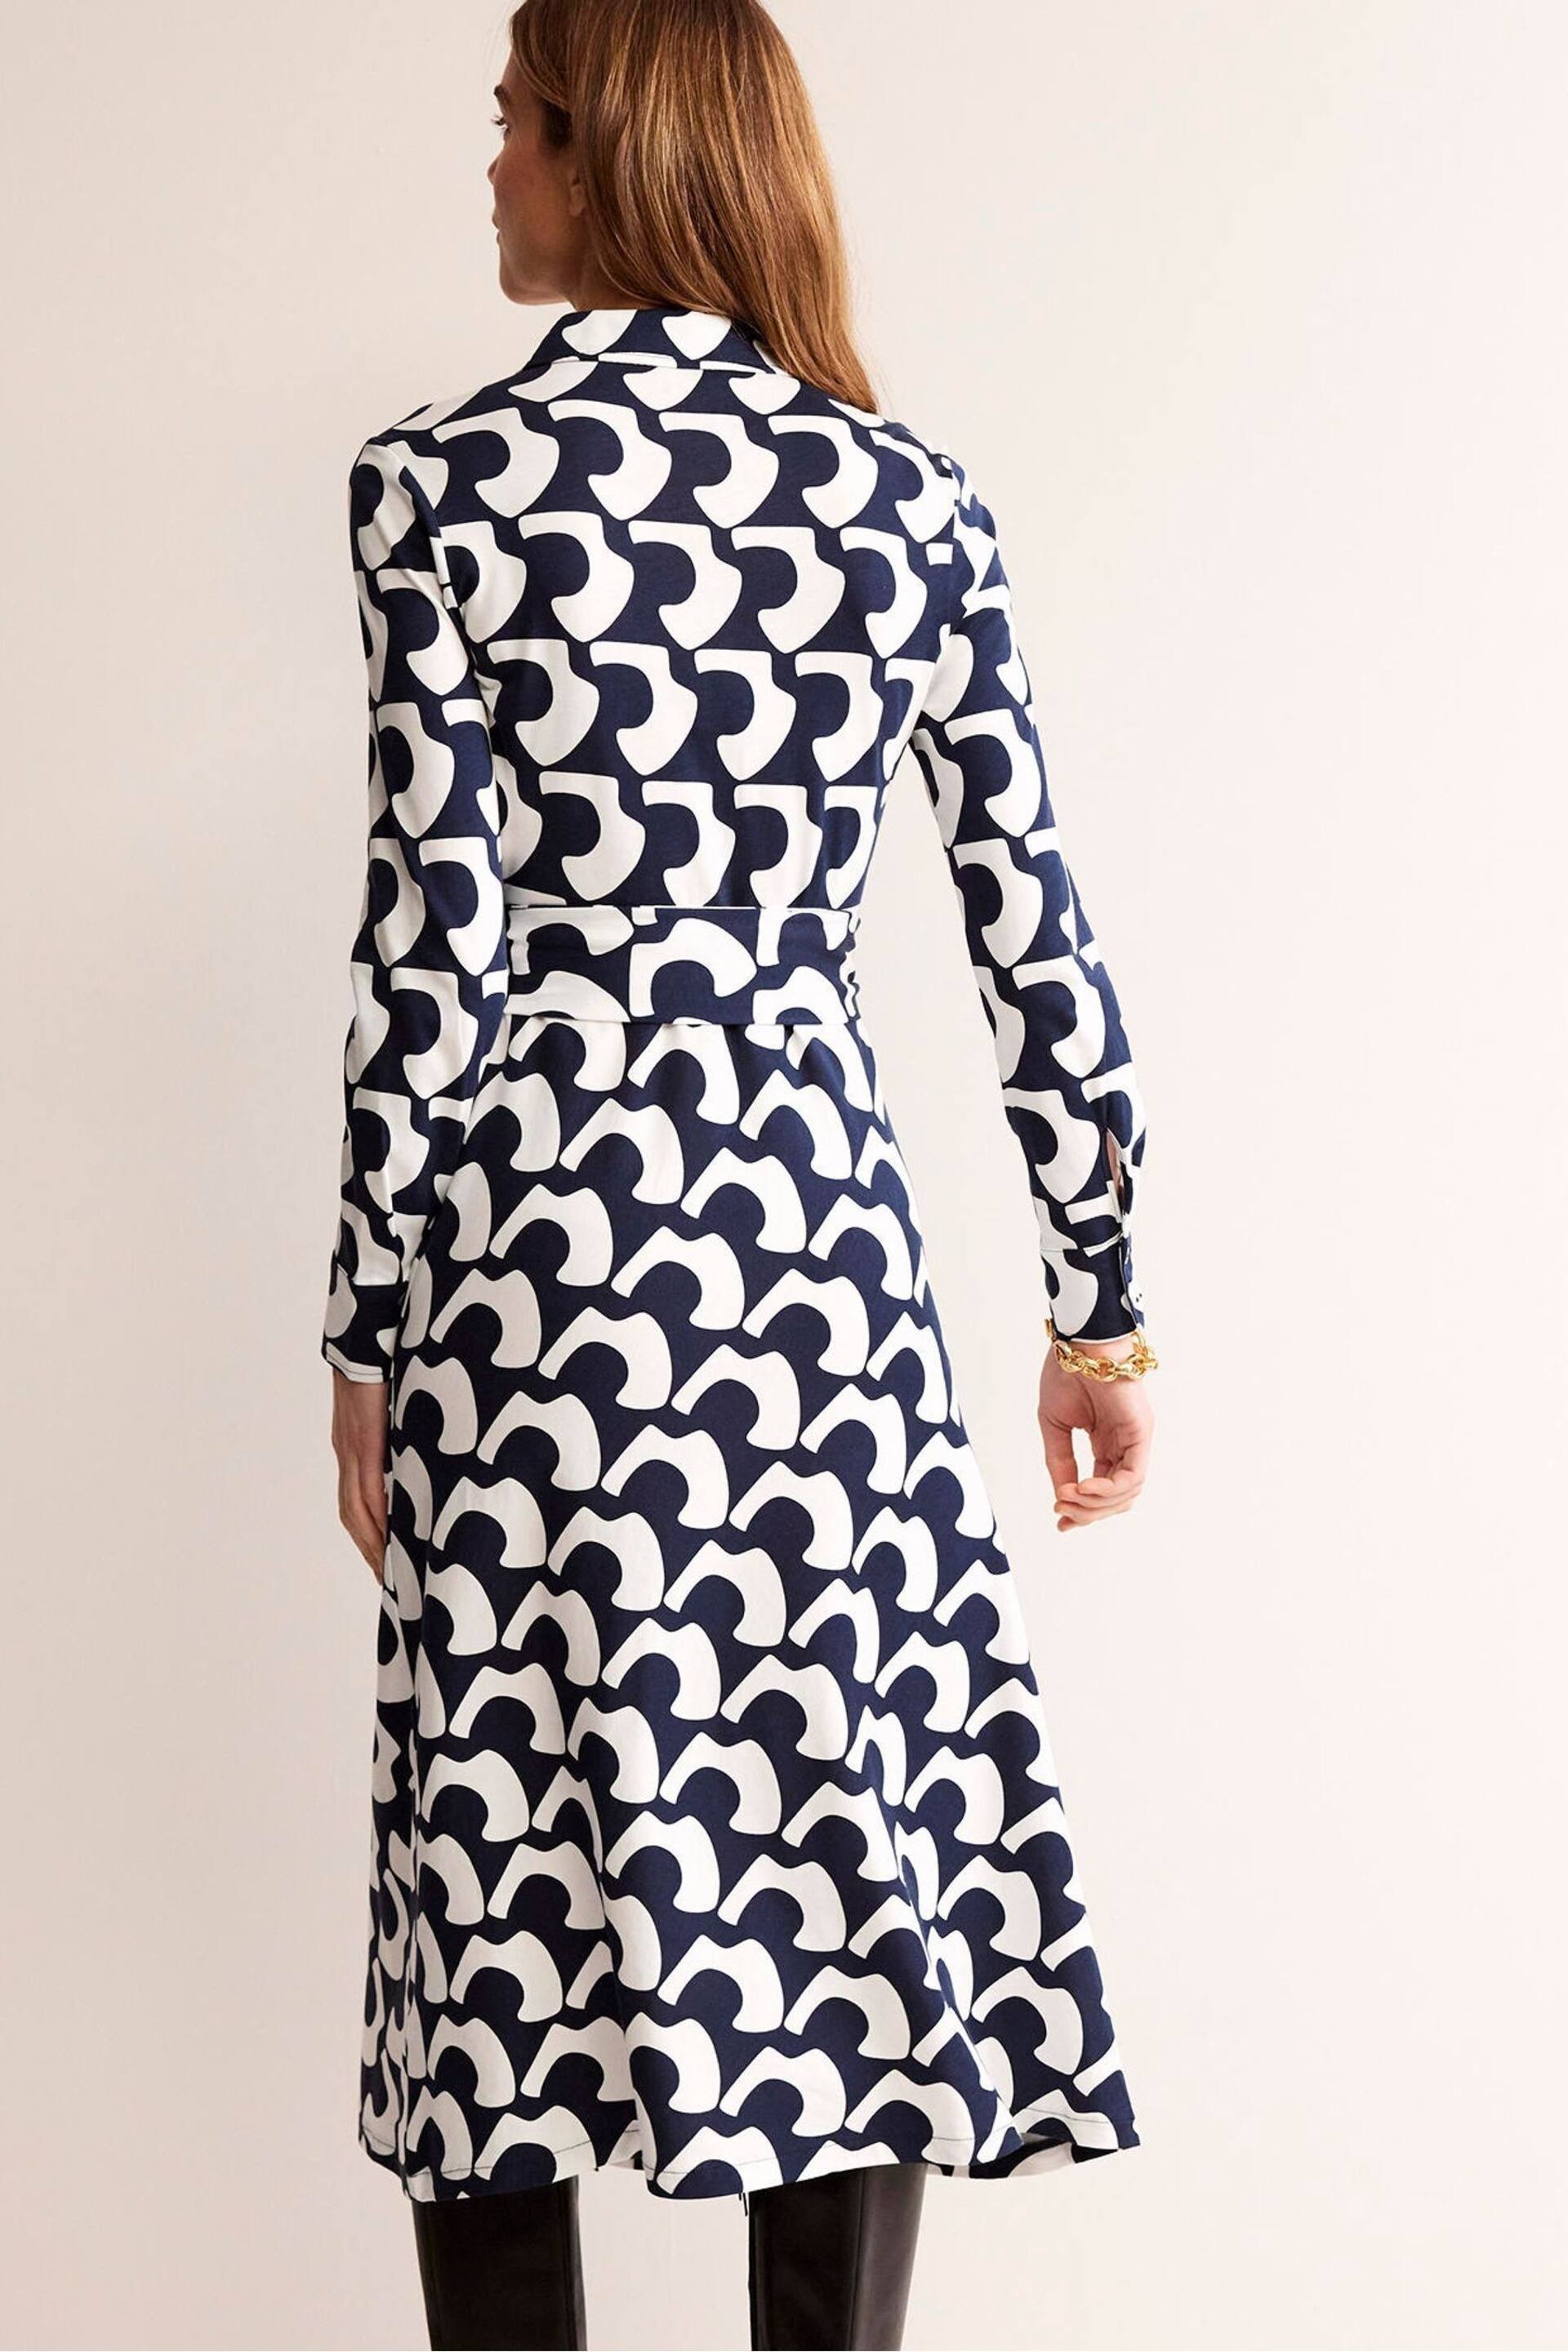 Boden Black/White Laura Jersey Midi Shirt Dress - Image 2 of 4